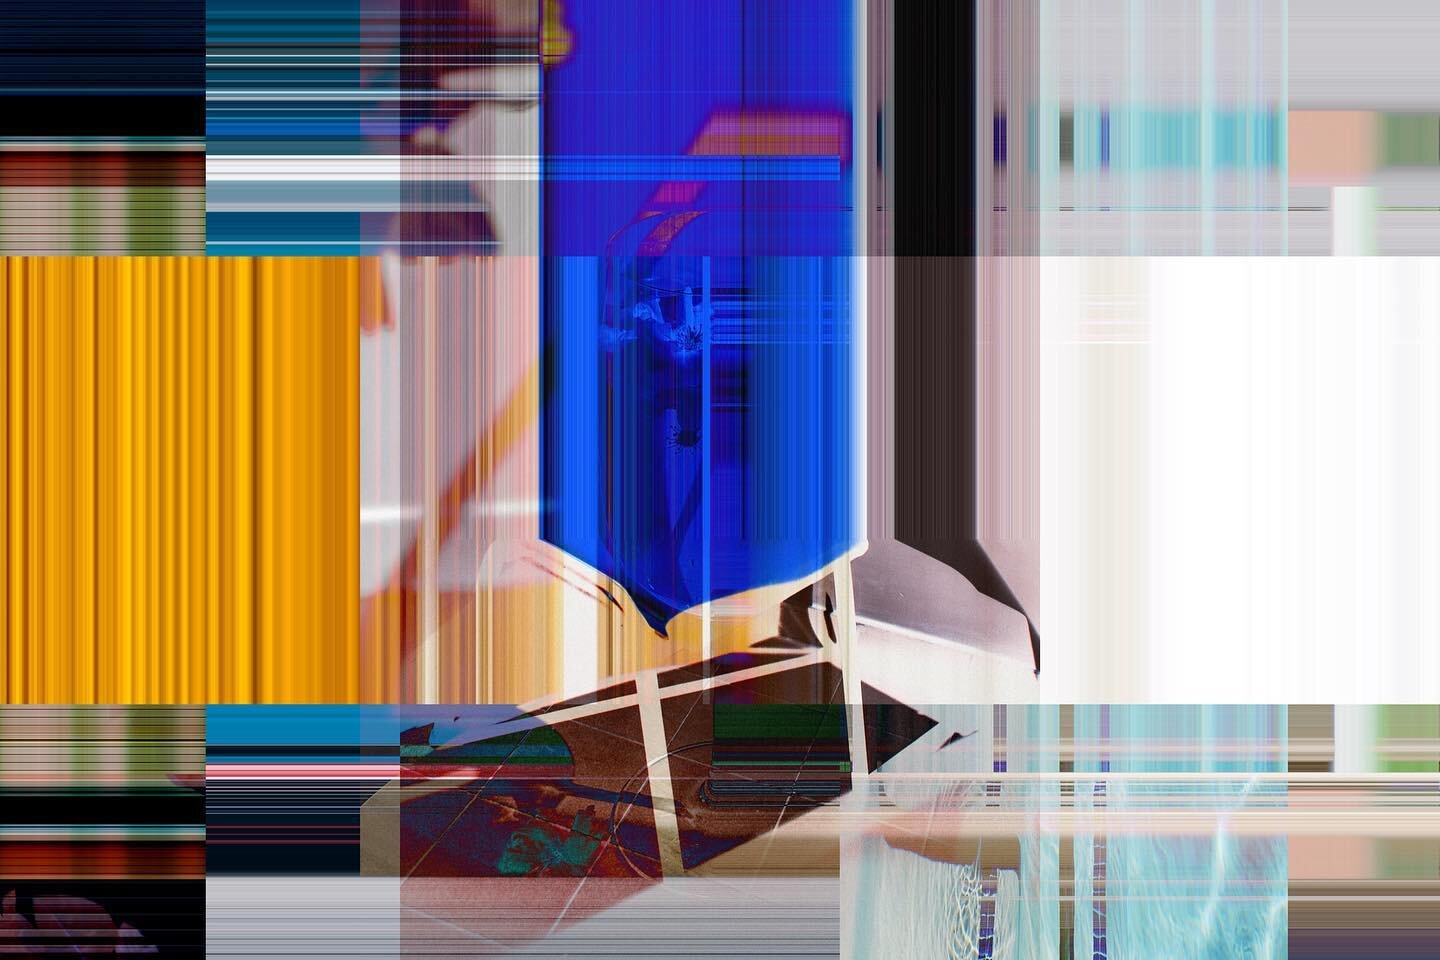 Data Composition 014﻿
Toru Izumida﻿
[2020]﻿
﻿
﻿
﻿
─────────────────﻿
#toruizumida #visualart #visualartist #artwork #art #artist #abstract #abstractart #digitalart #digitalartist #graphicdesign #graphic #photography #newmediaart #newmediaartist #cont